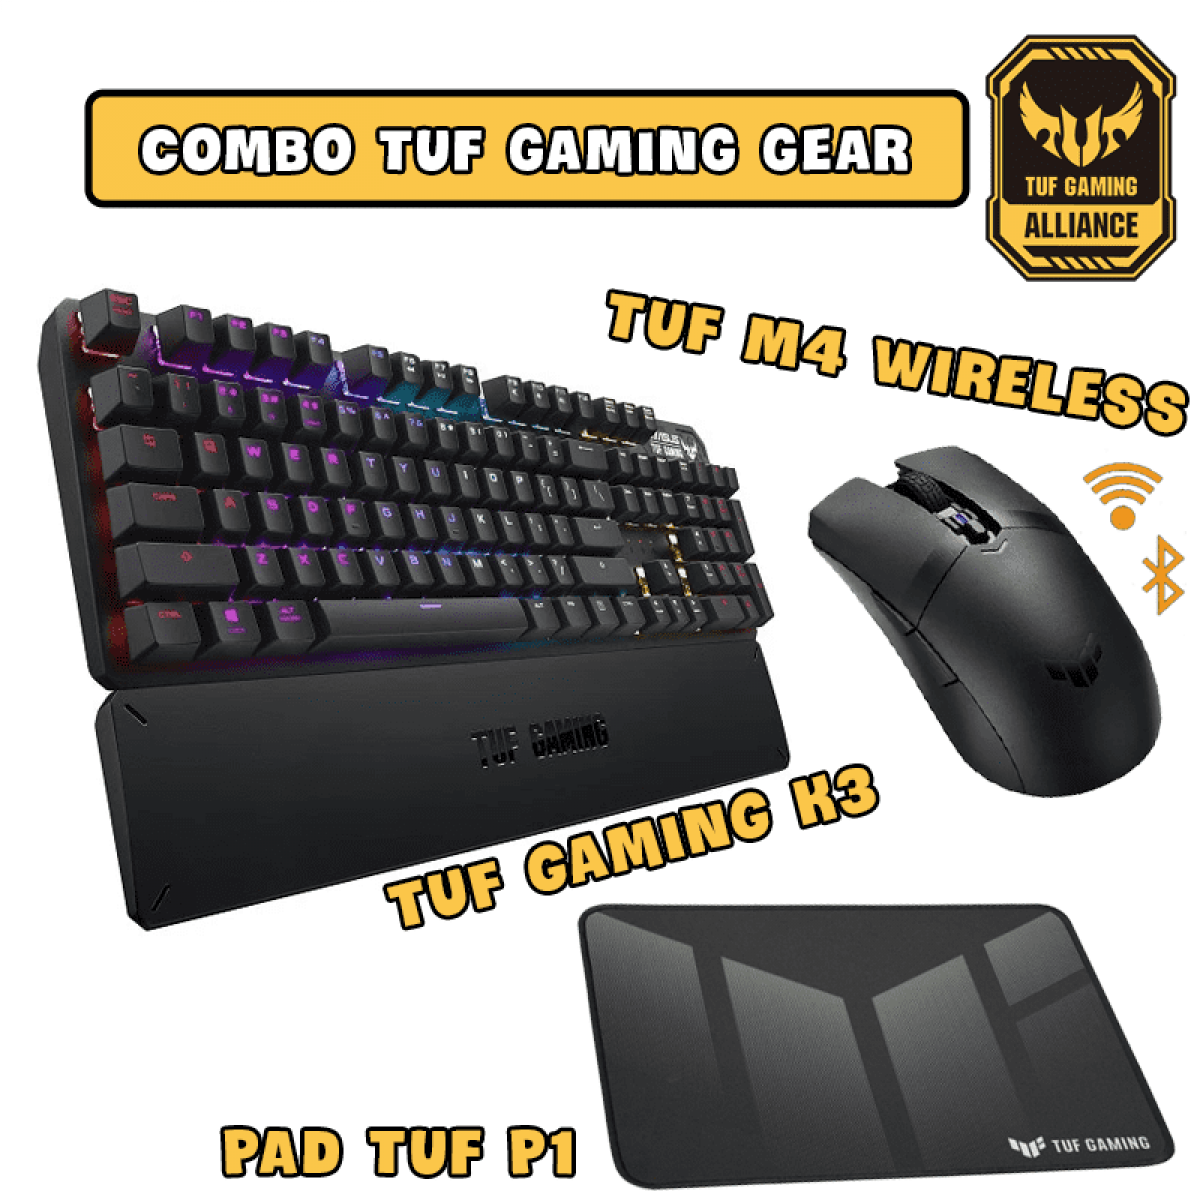 Combo TUF Gaming Gear | TUF Gaming K3 - TUF M4 Wireless - TUF P1